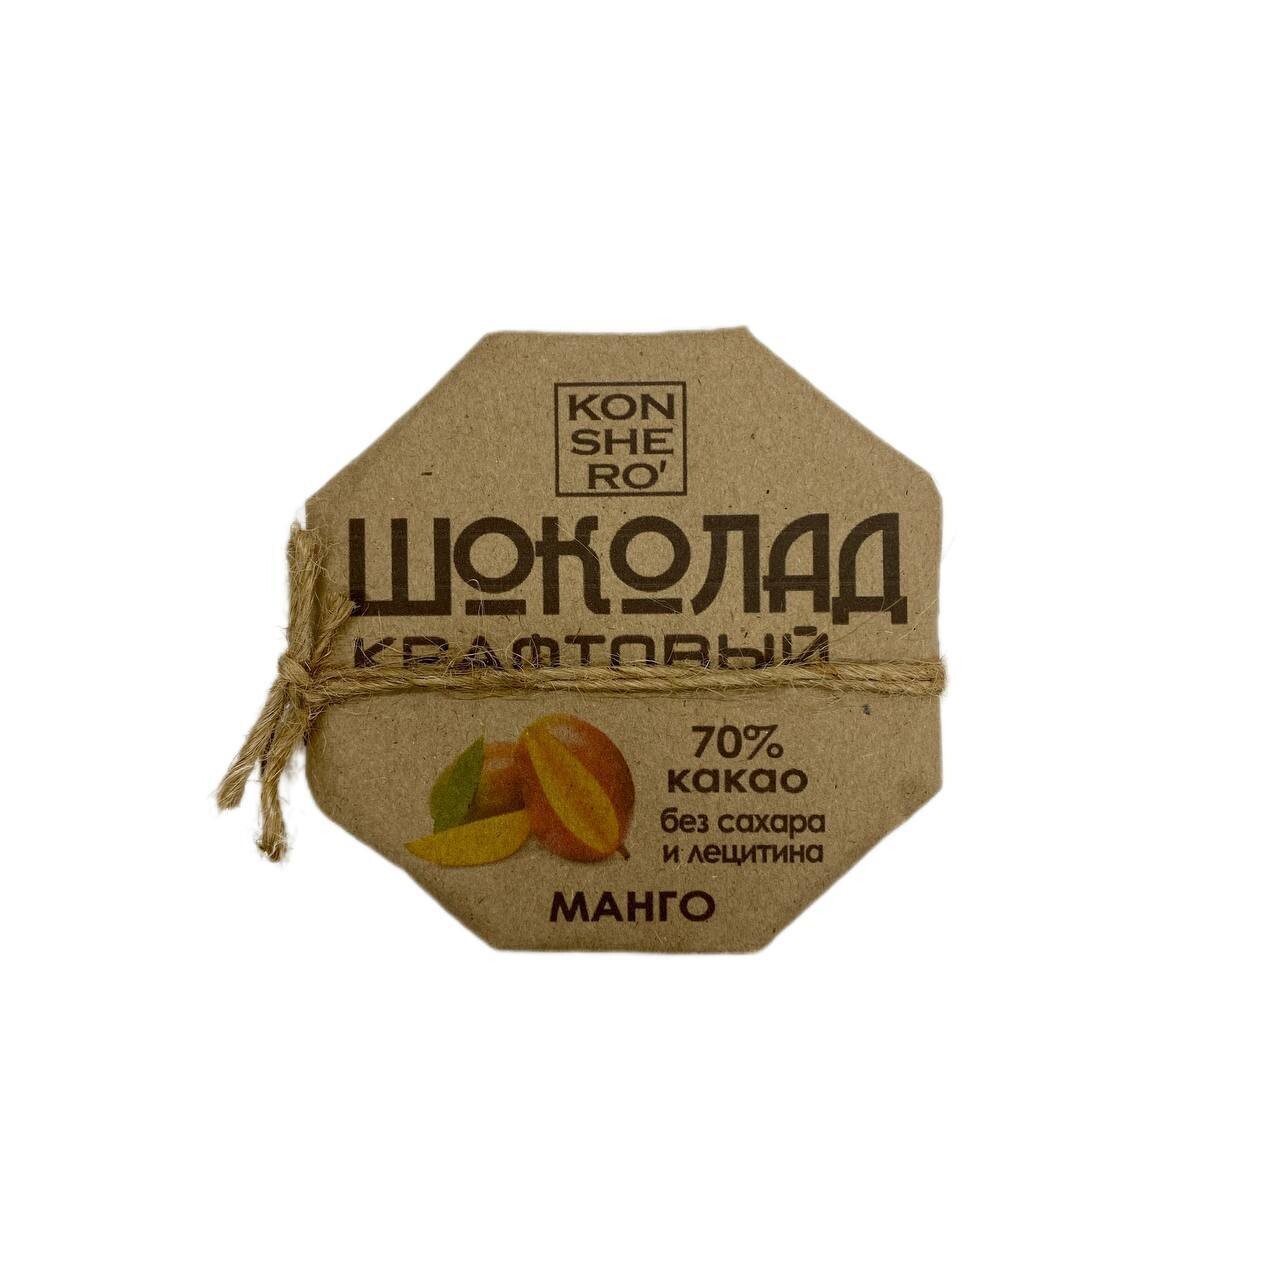 Крафтовый шоколад с манго, KONSHERO, 50 г